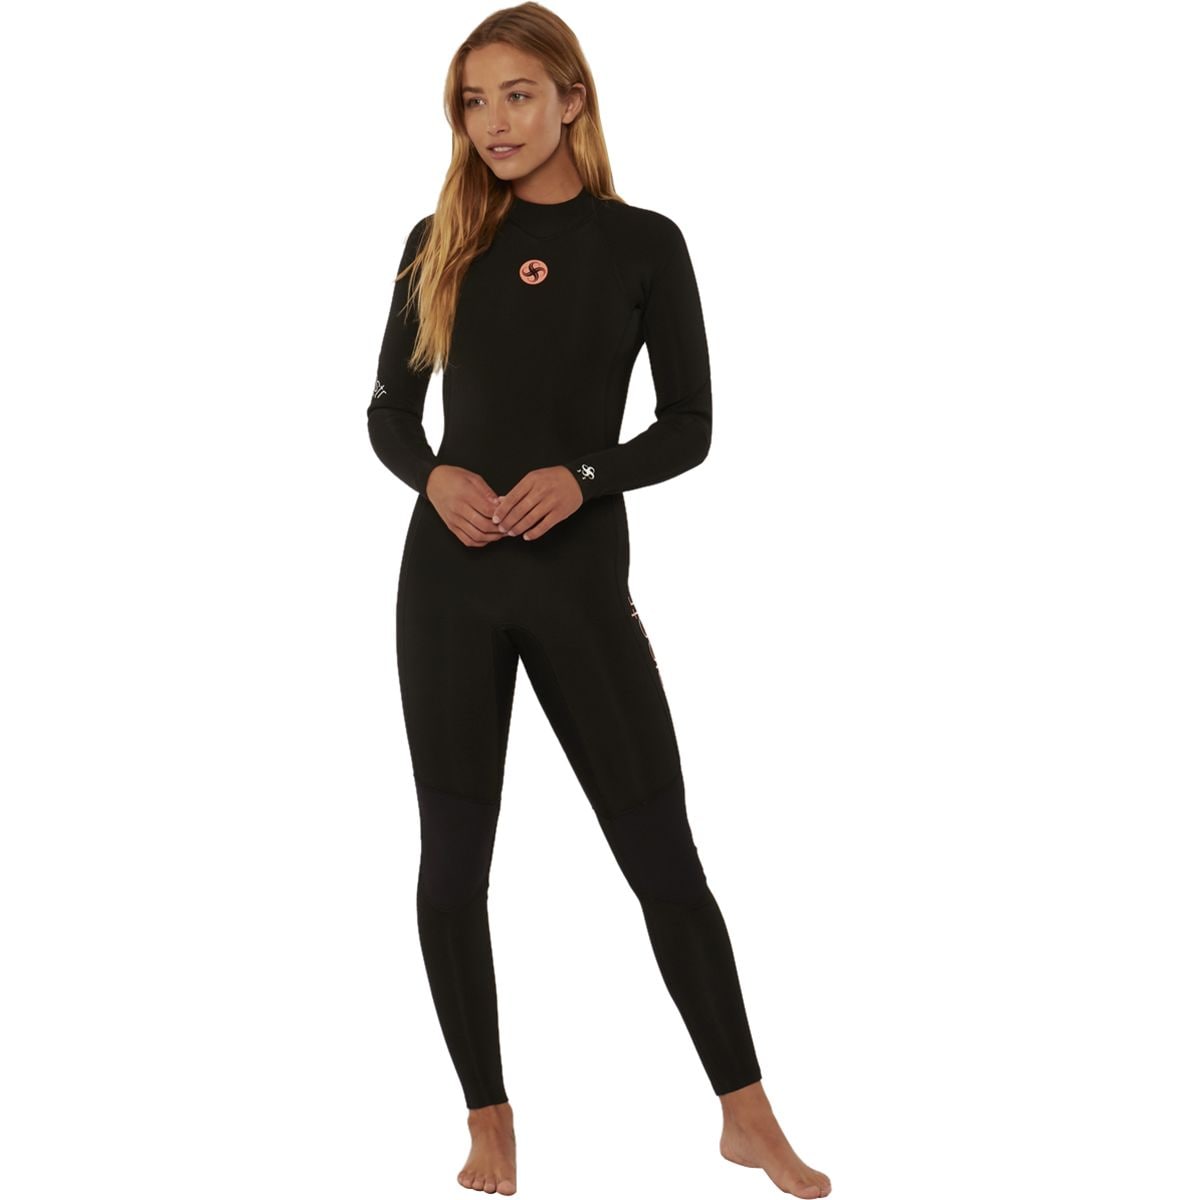 Sisstr Revolution 7 Seas 3/2mm Back-Zip Long-Sleeve Wetsuit - Women's